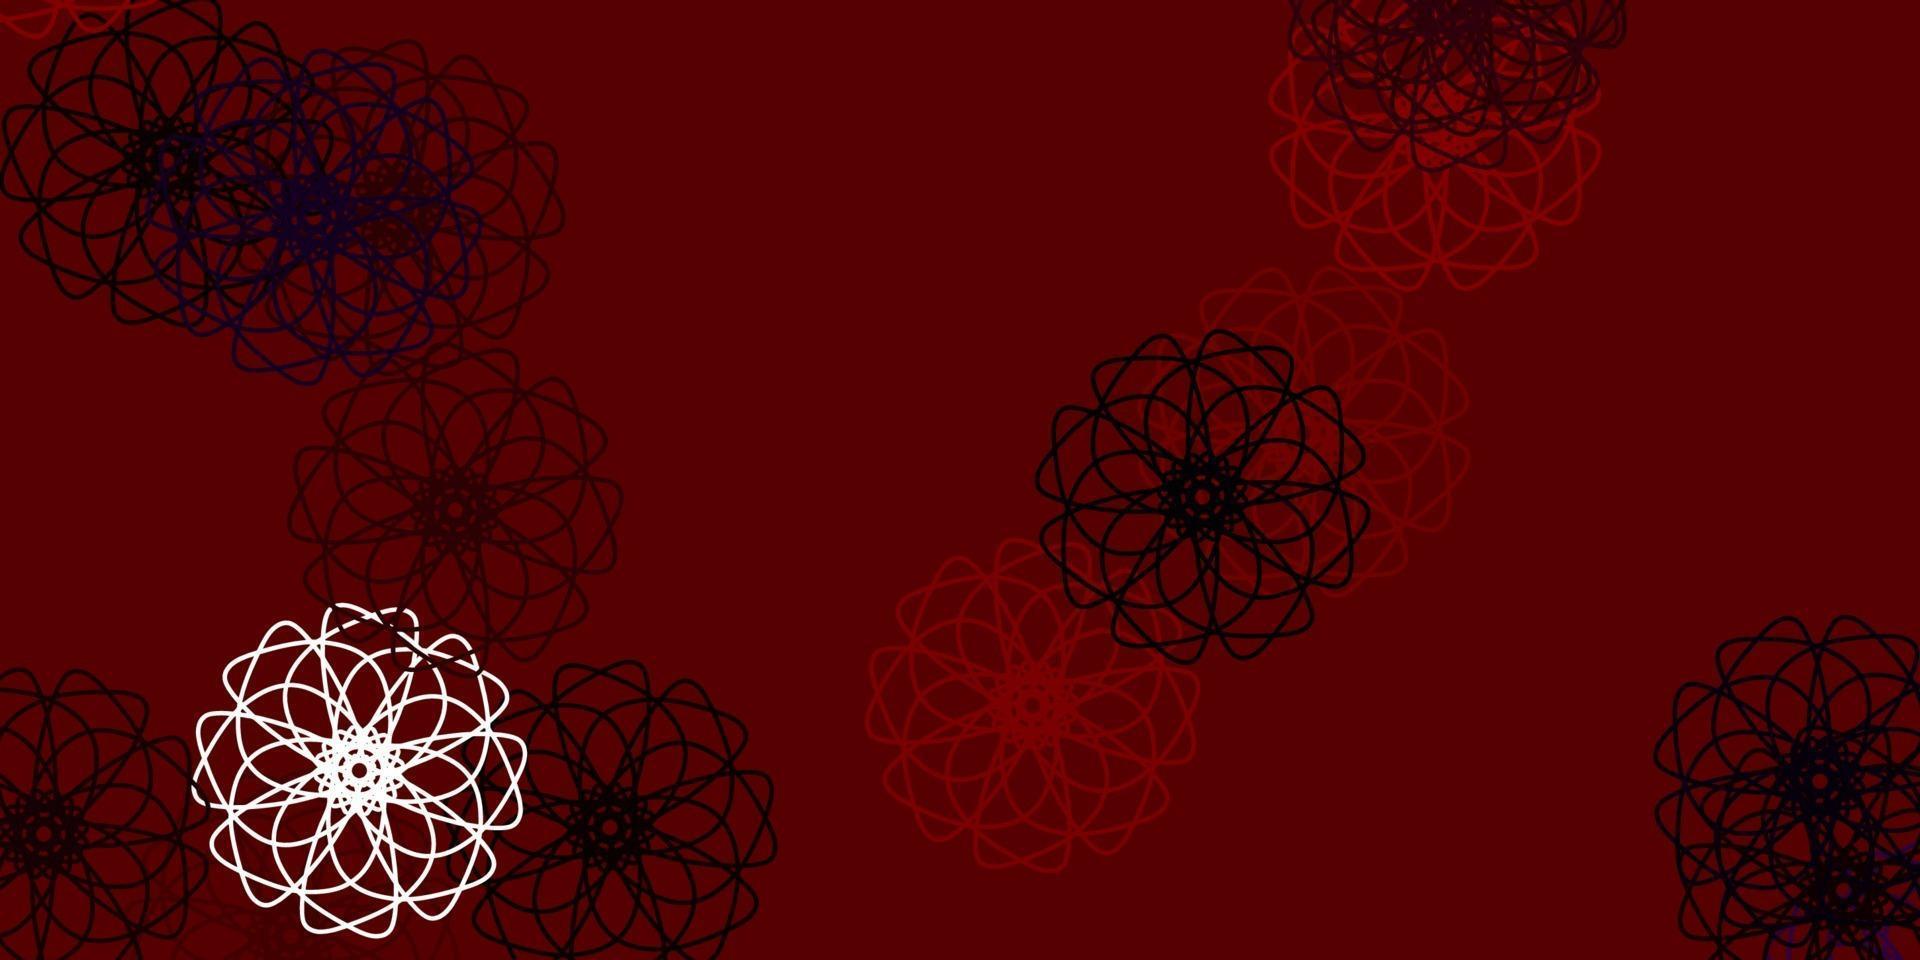 hellrosa, rote Vektor-Gekritzel-Textur mit Blumen. vektor